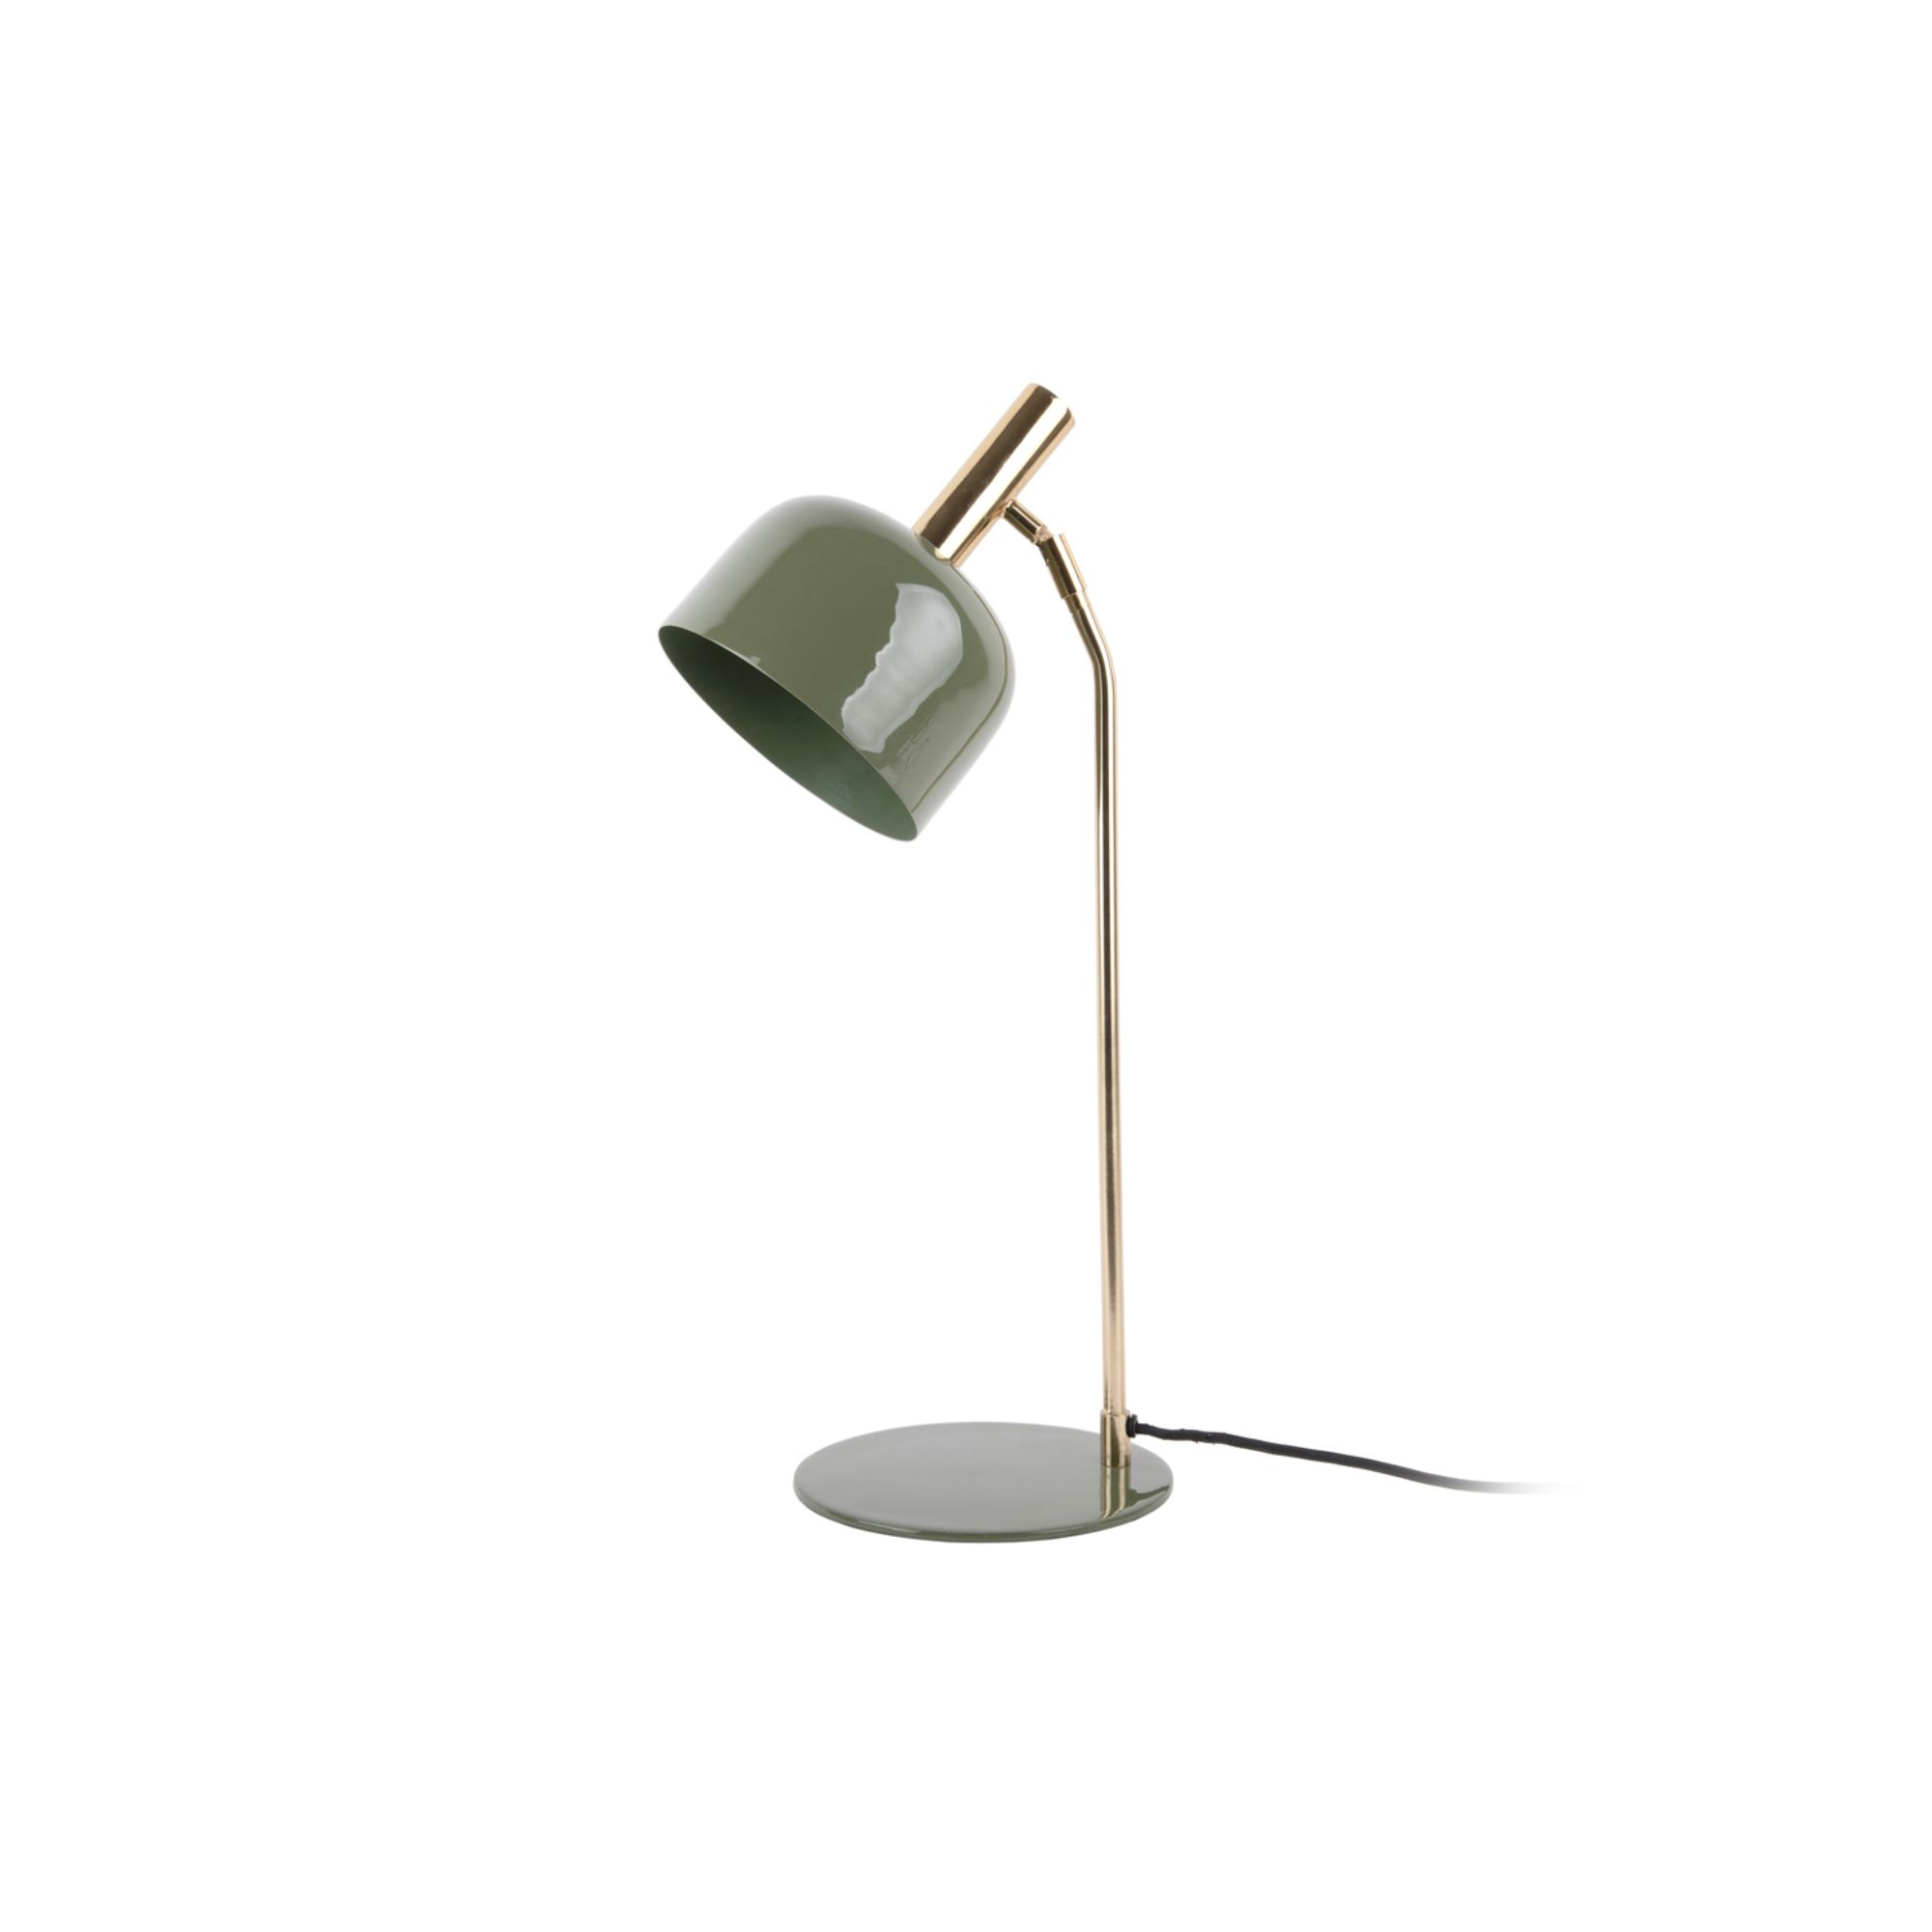 Tafellamp Smart - Groen - 23x19.5x56cm